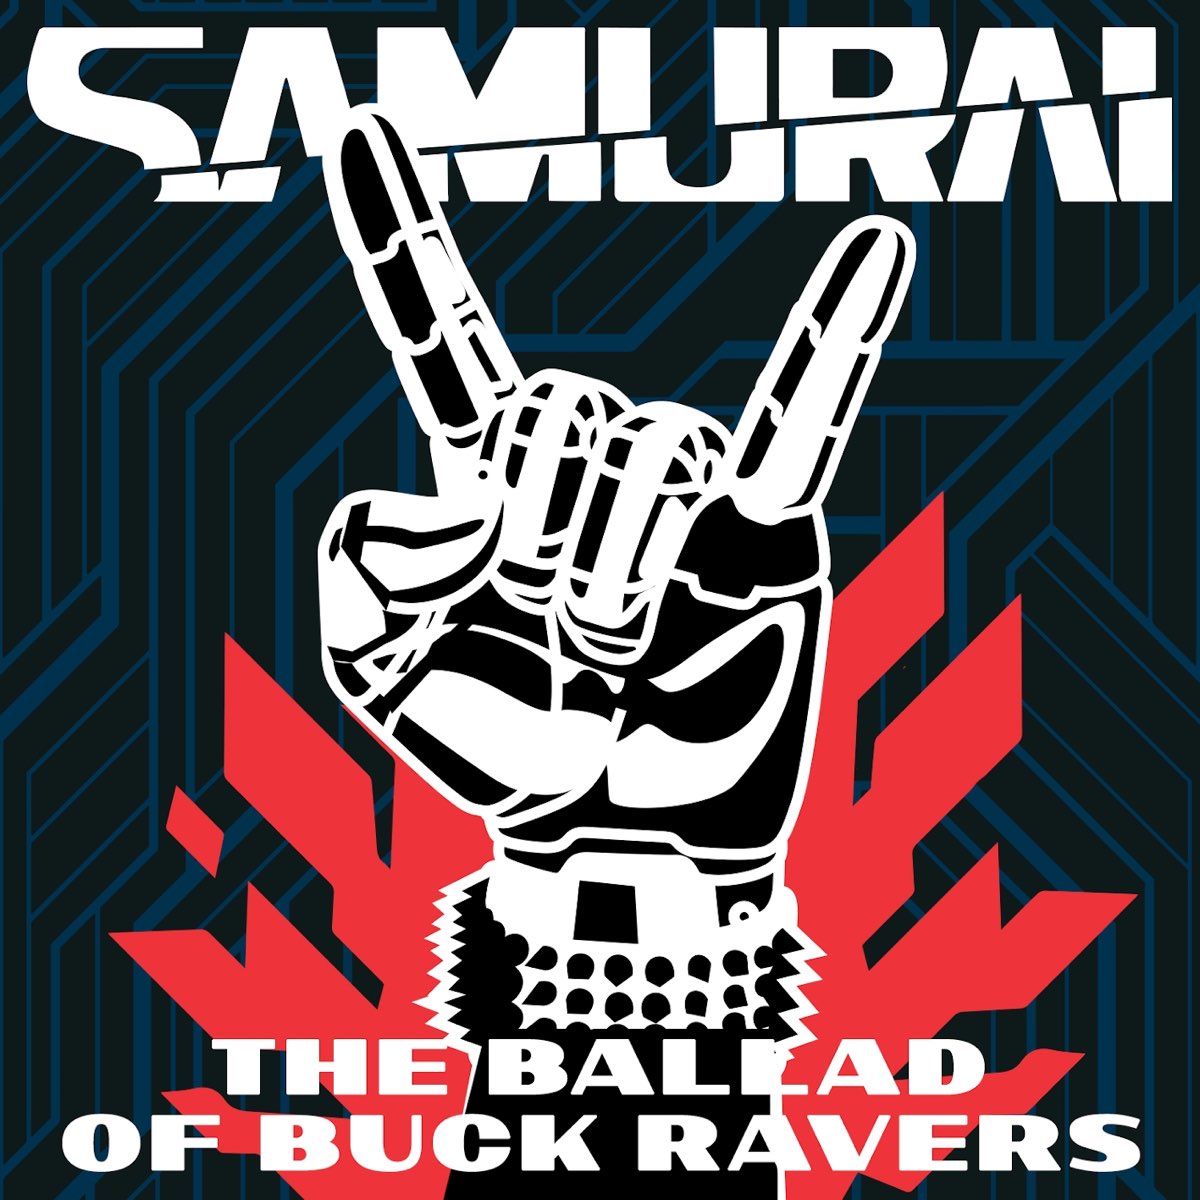 Samurai песни cyberpunk фото 3